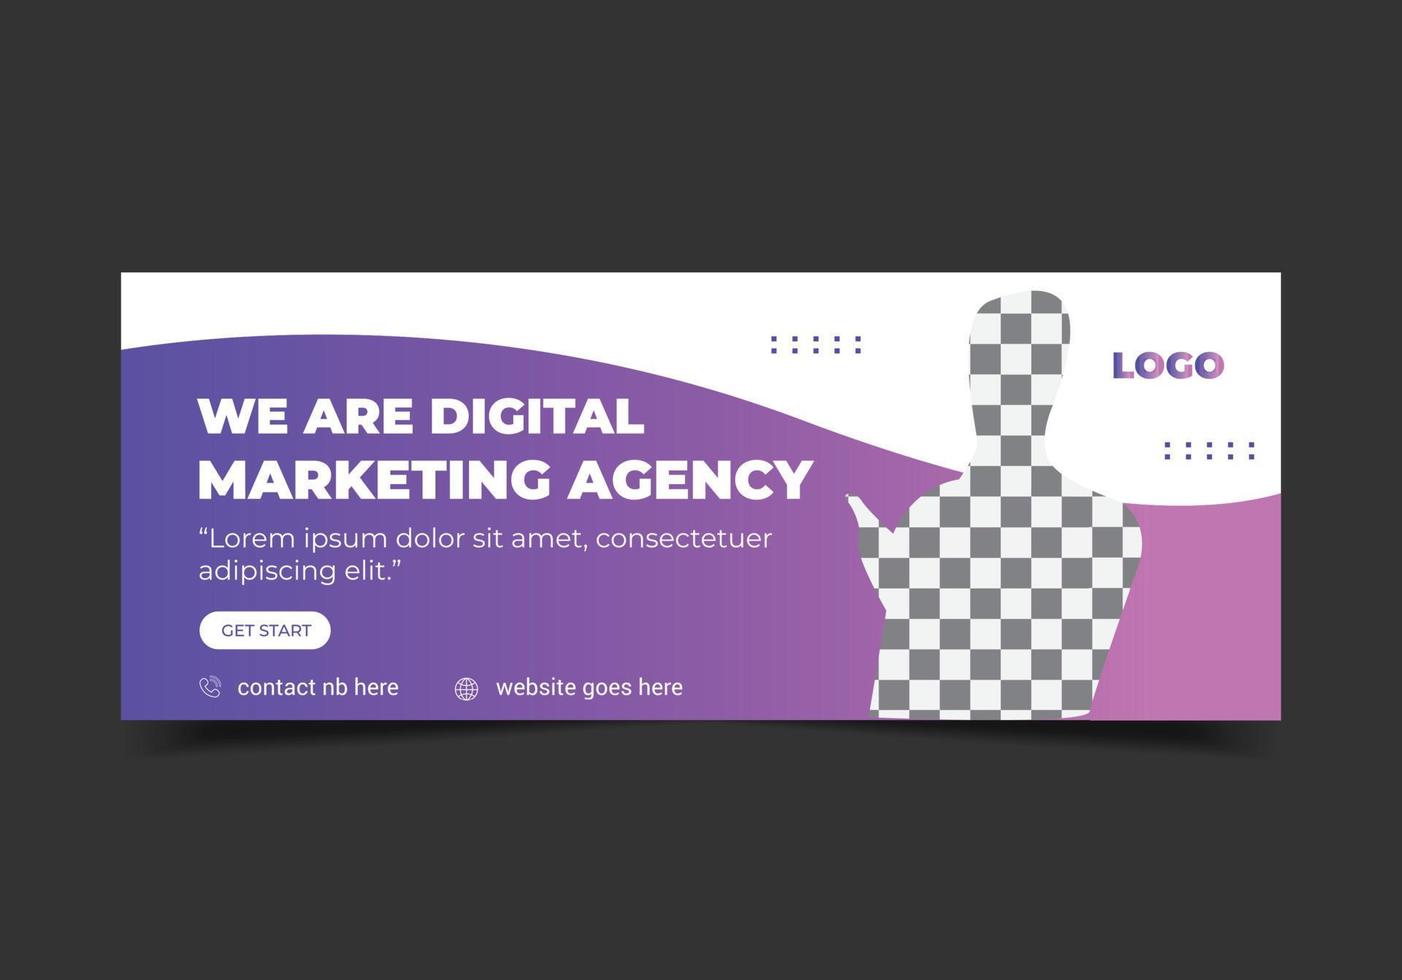 modelo de capa de design de mídia social de agência de negócios de marketing digital, modelo de banner da web, design de banner abstrato para anúncios, folheto vetor